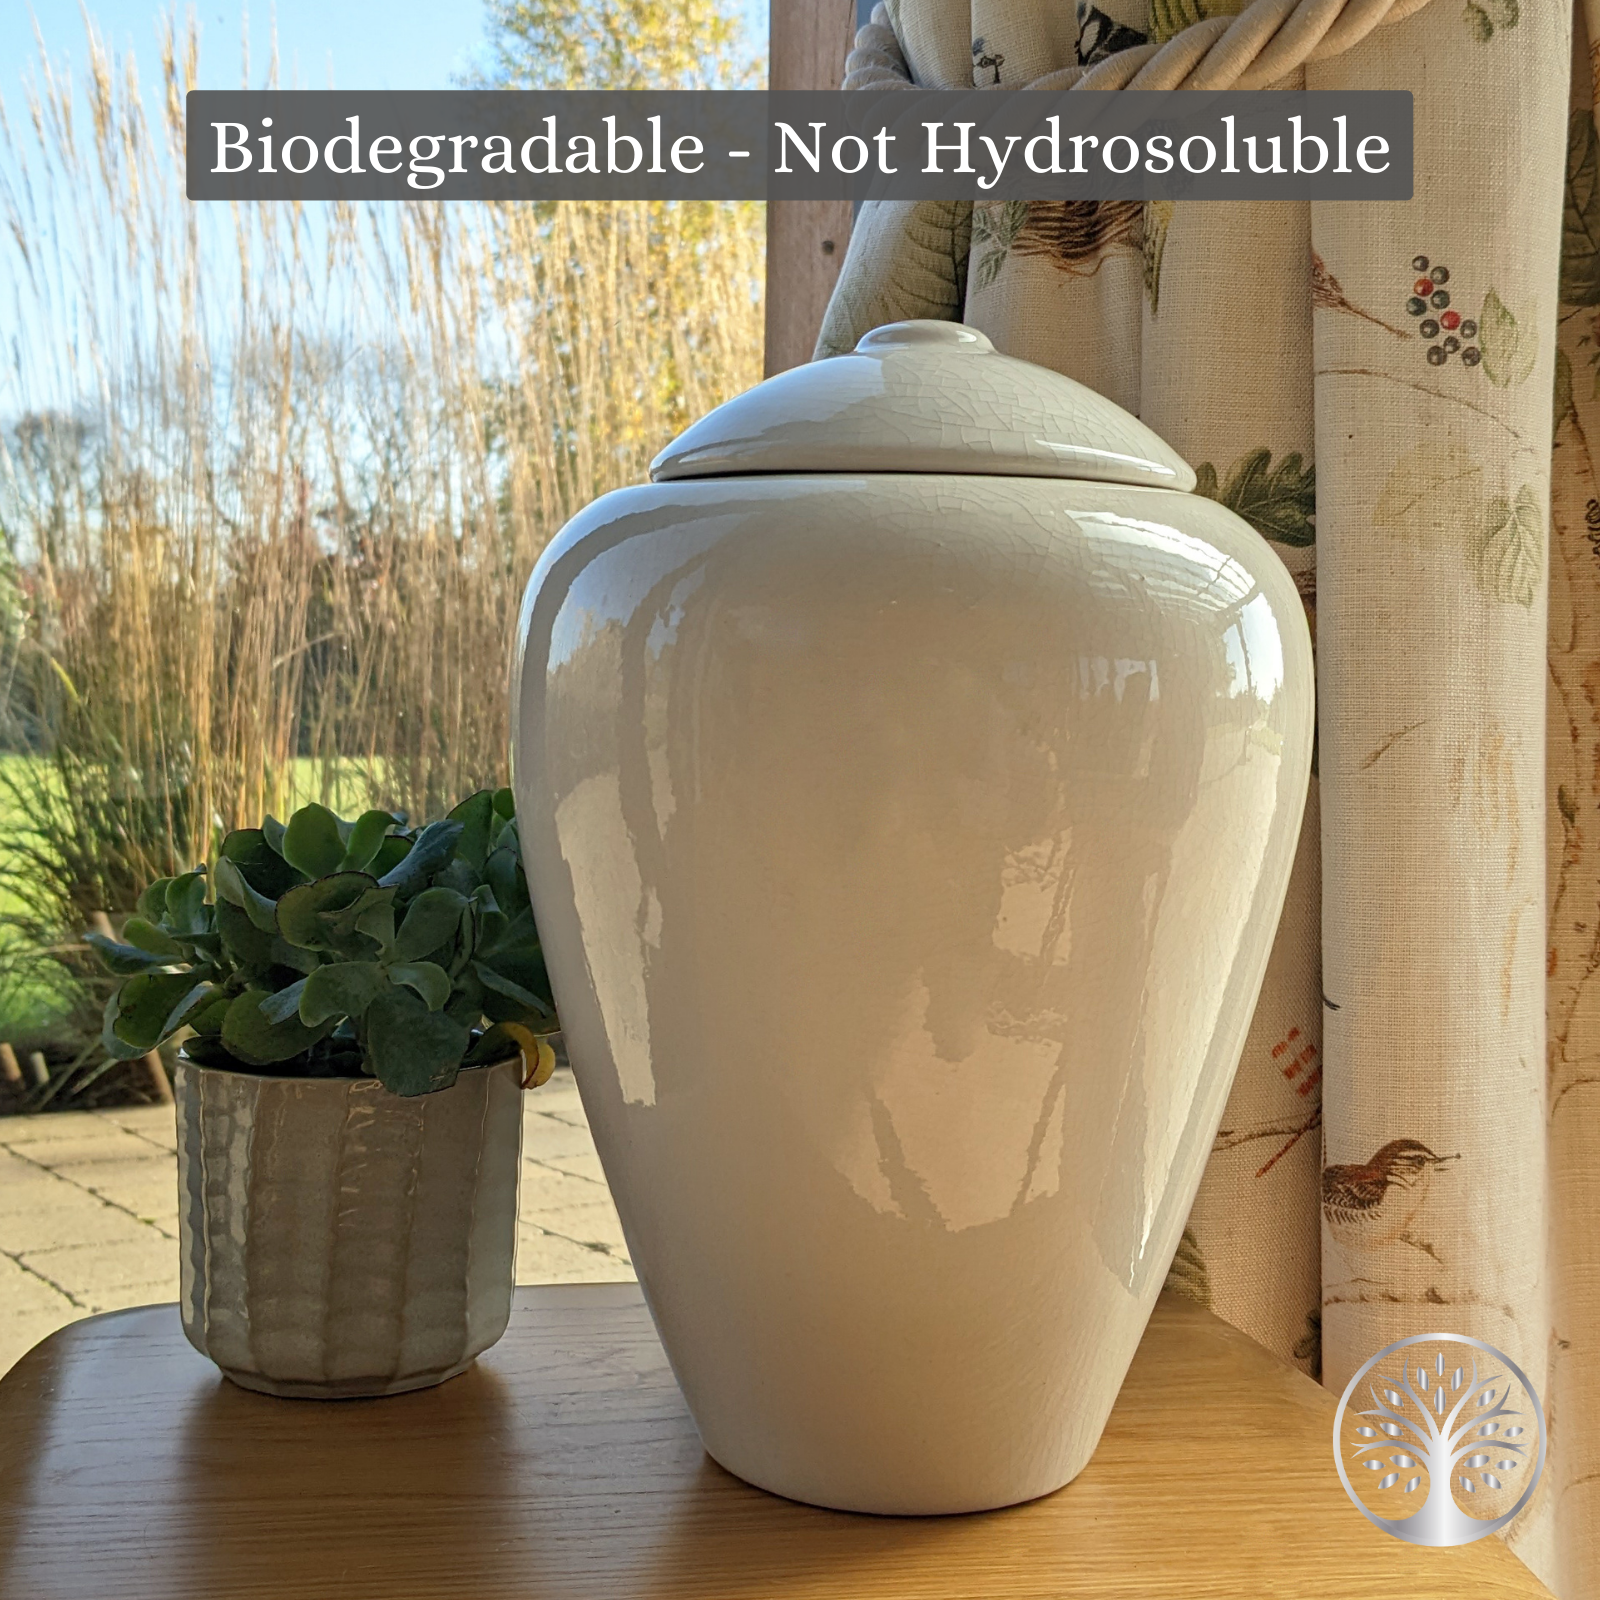 Hielo Biodegradable Urn